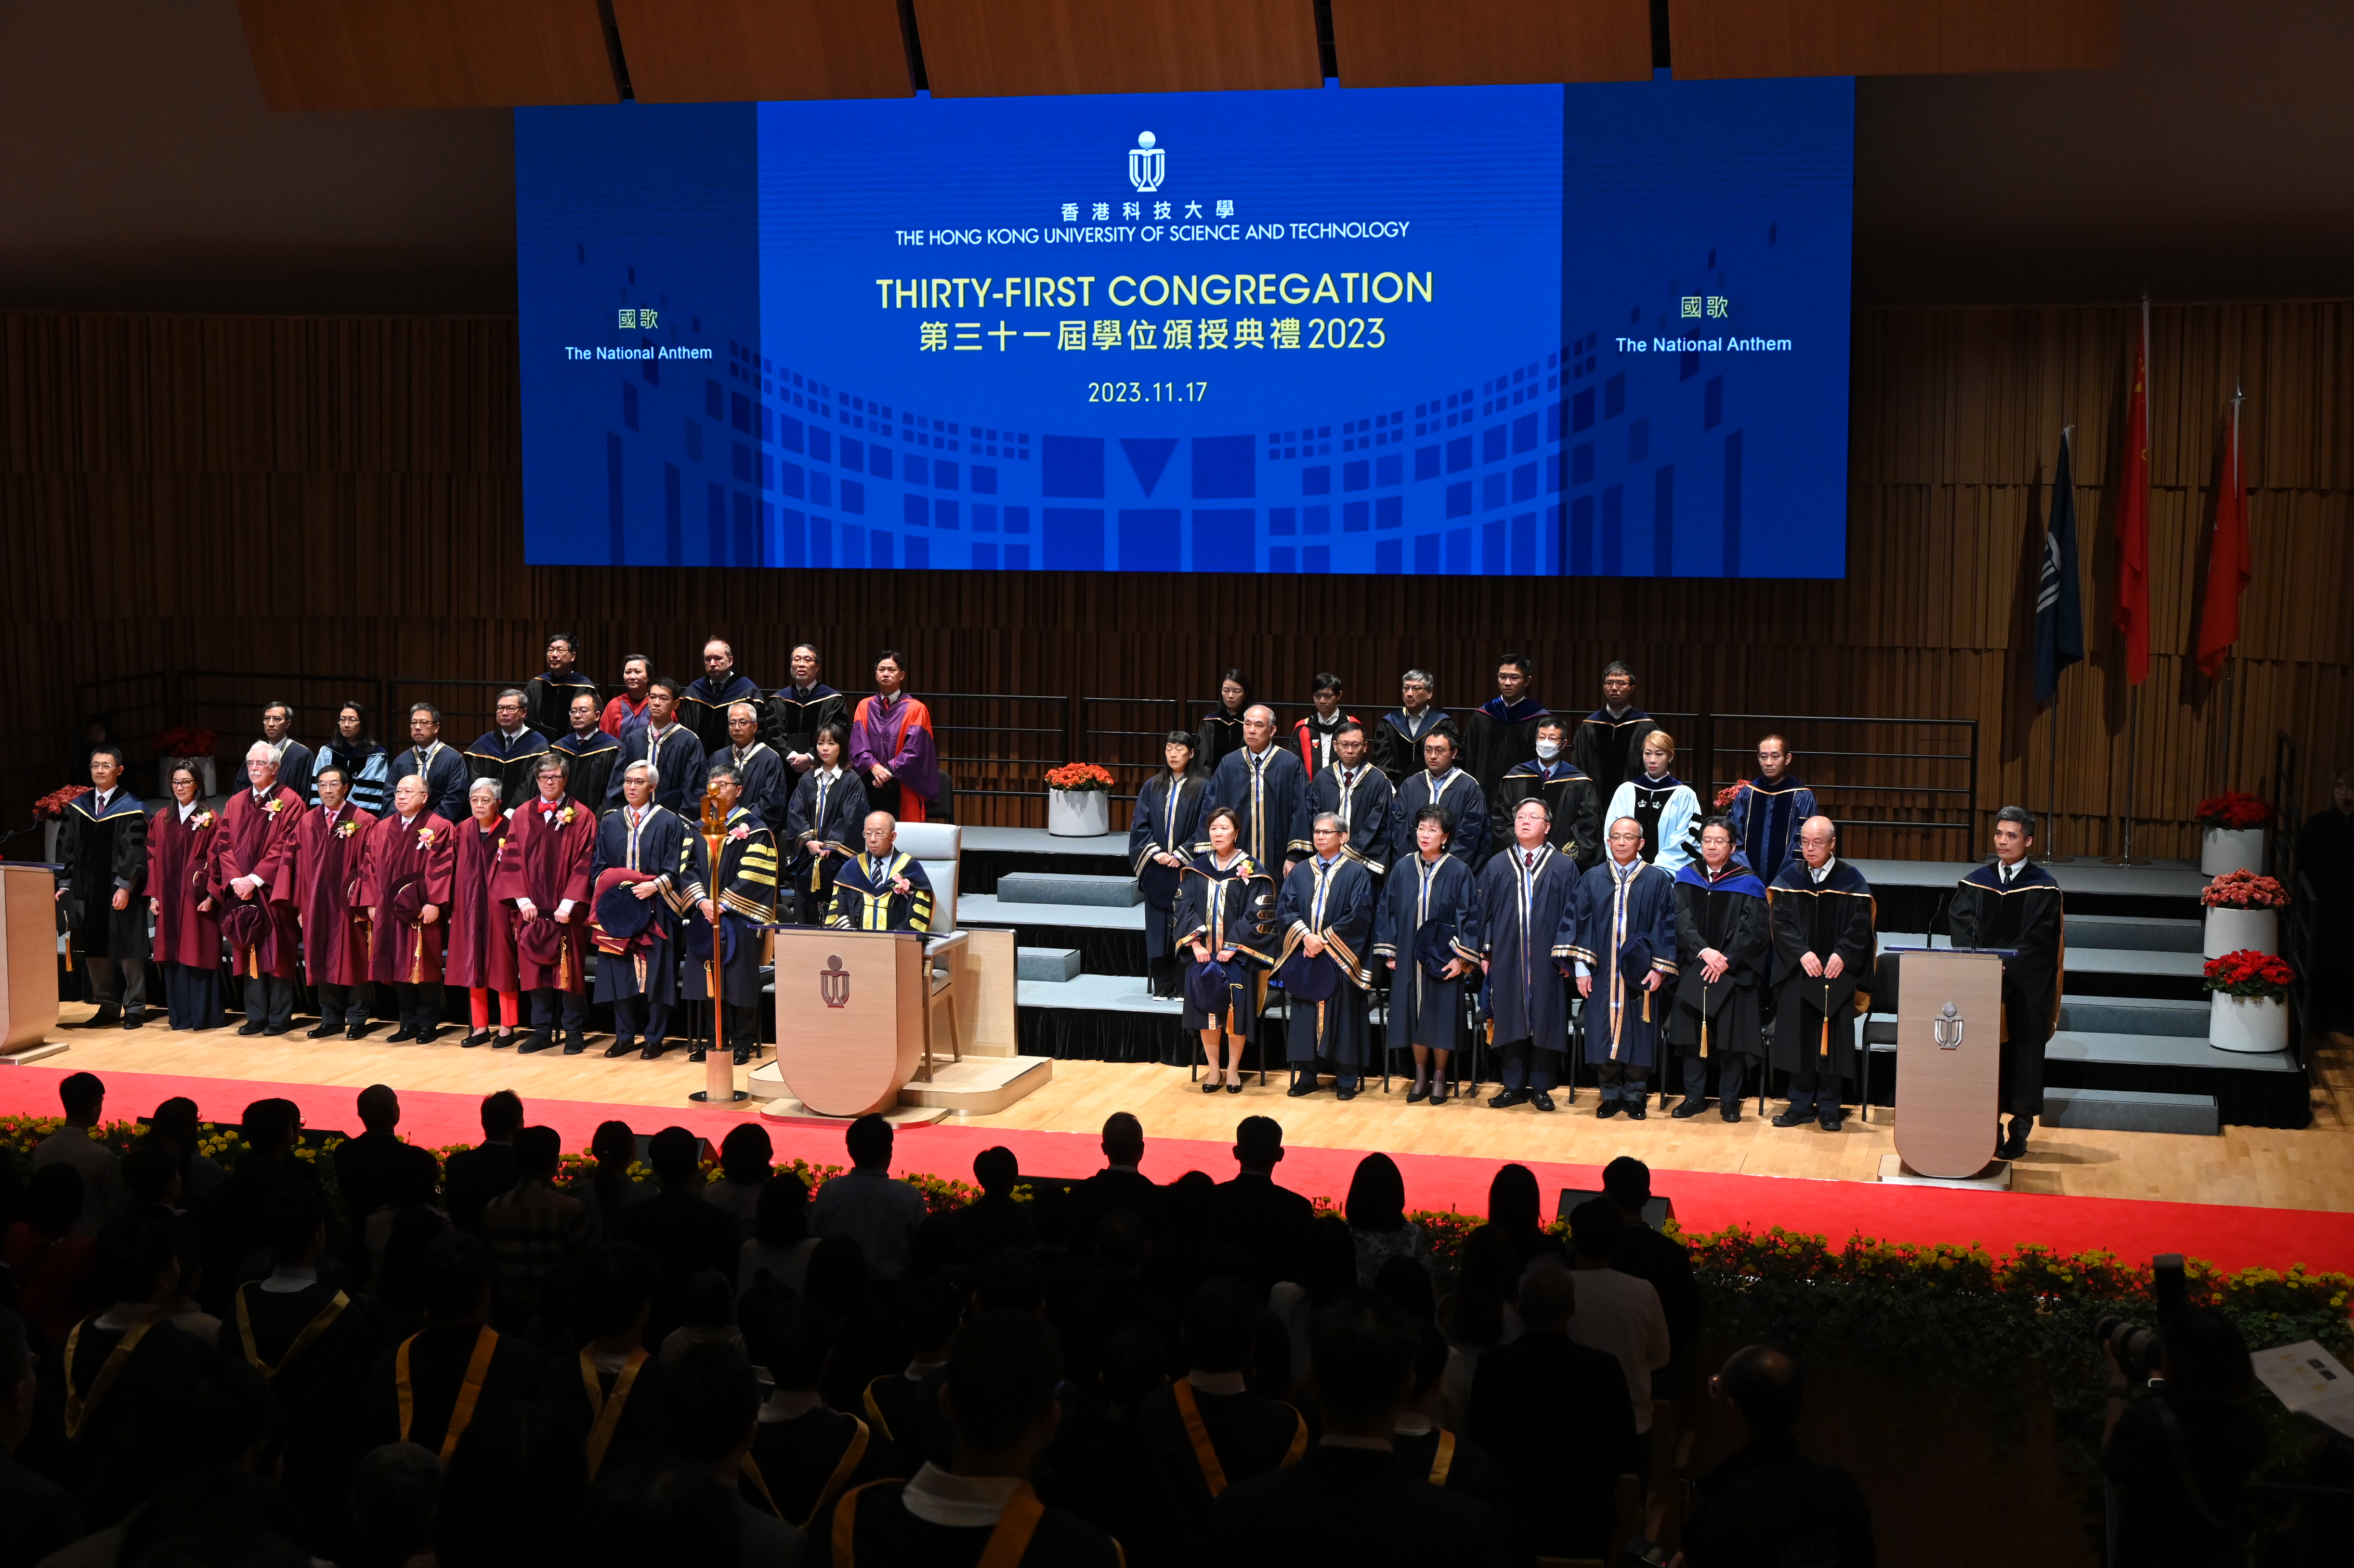 HKUST celebrates its 31st congregation today